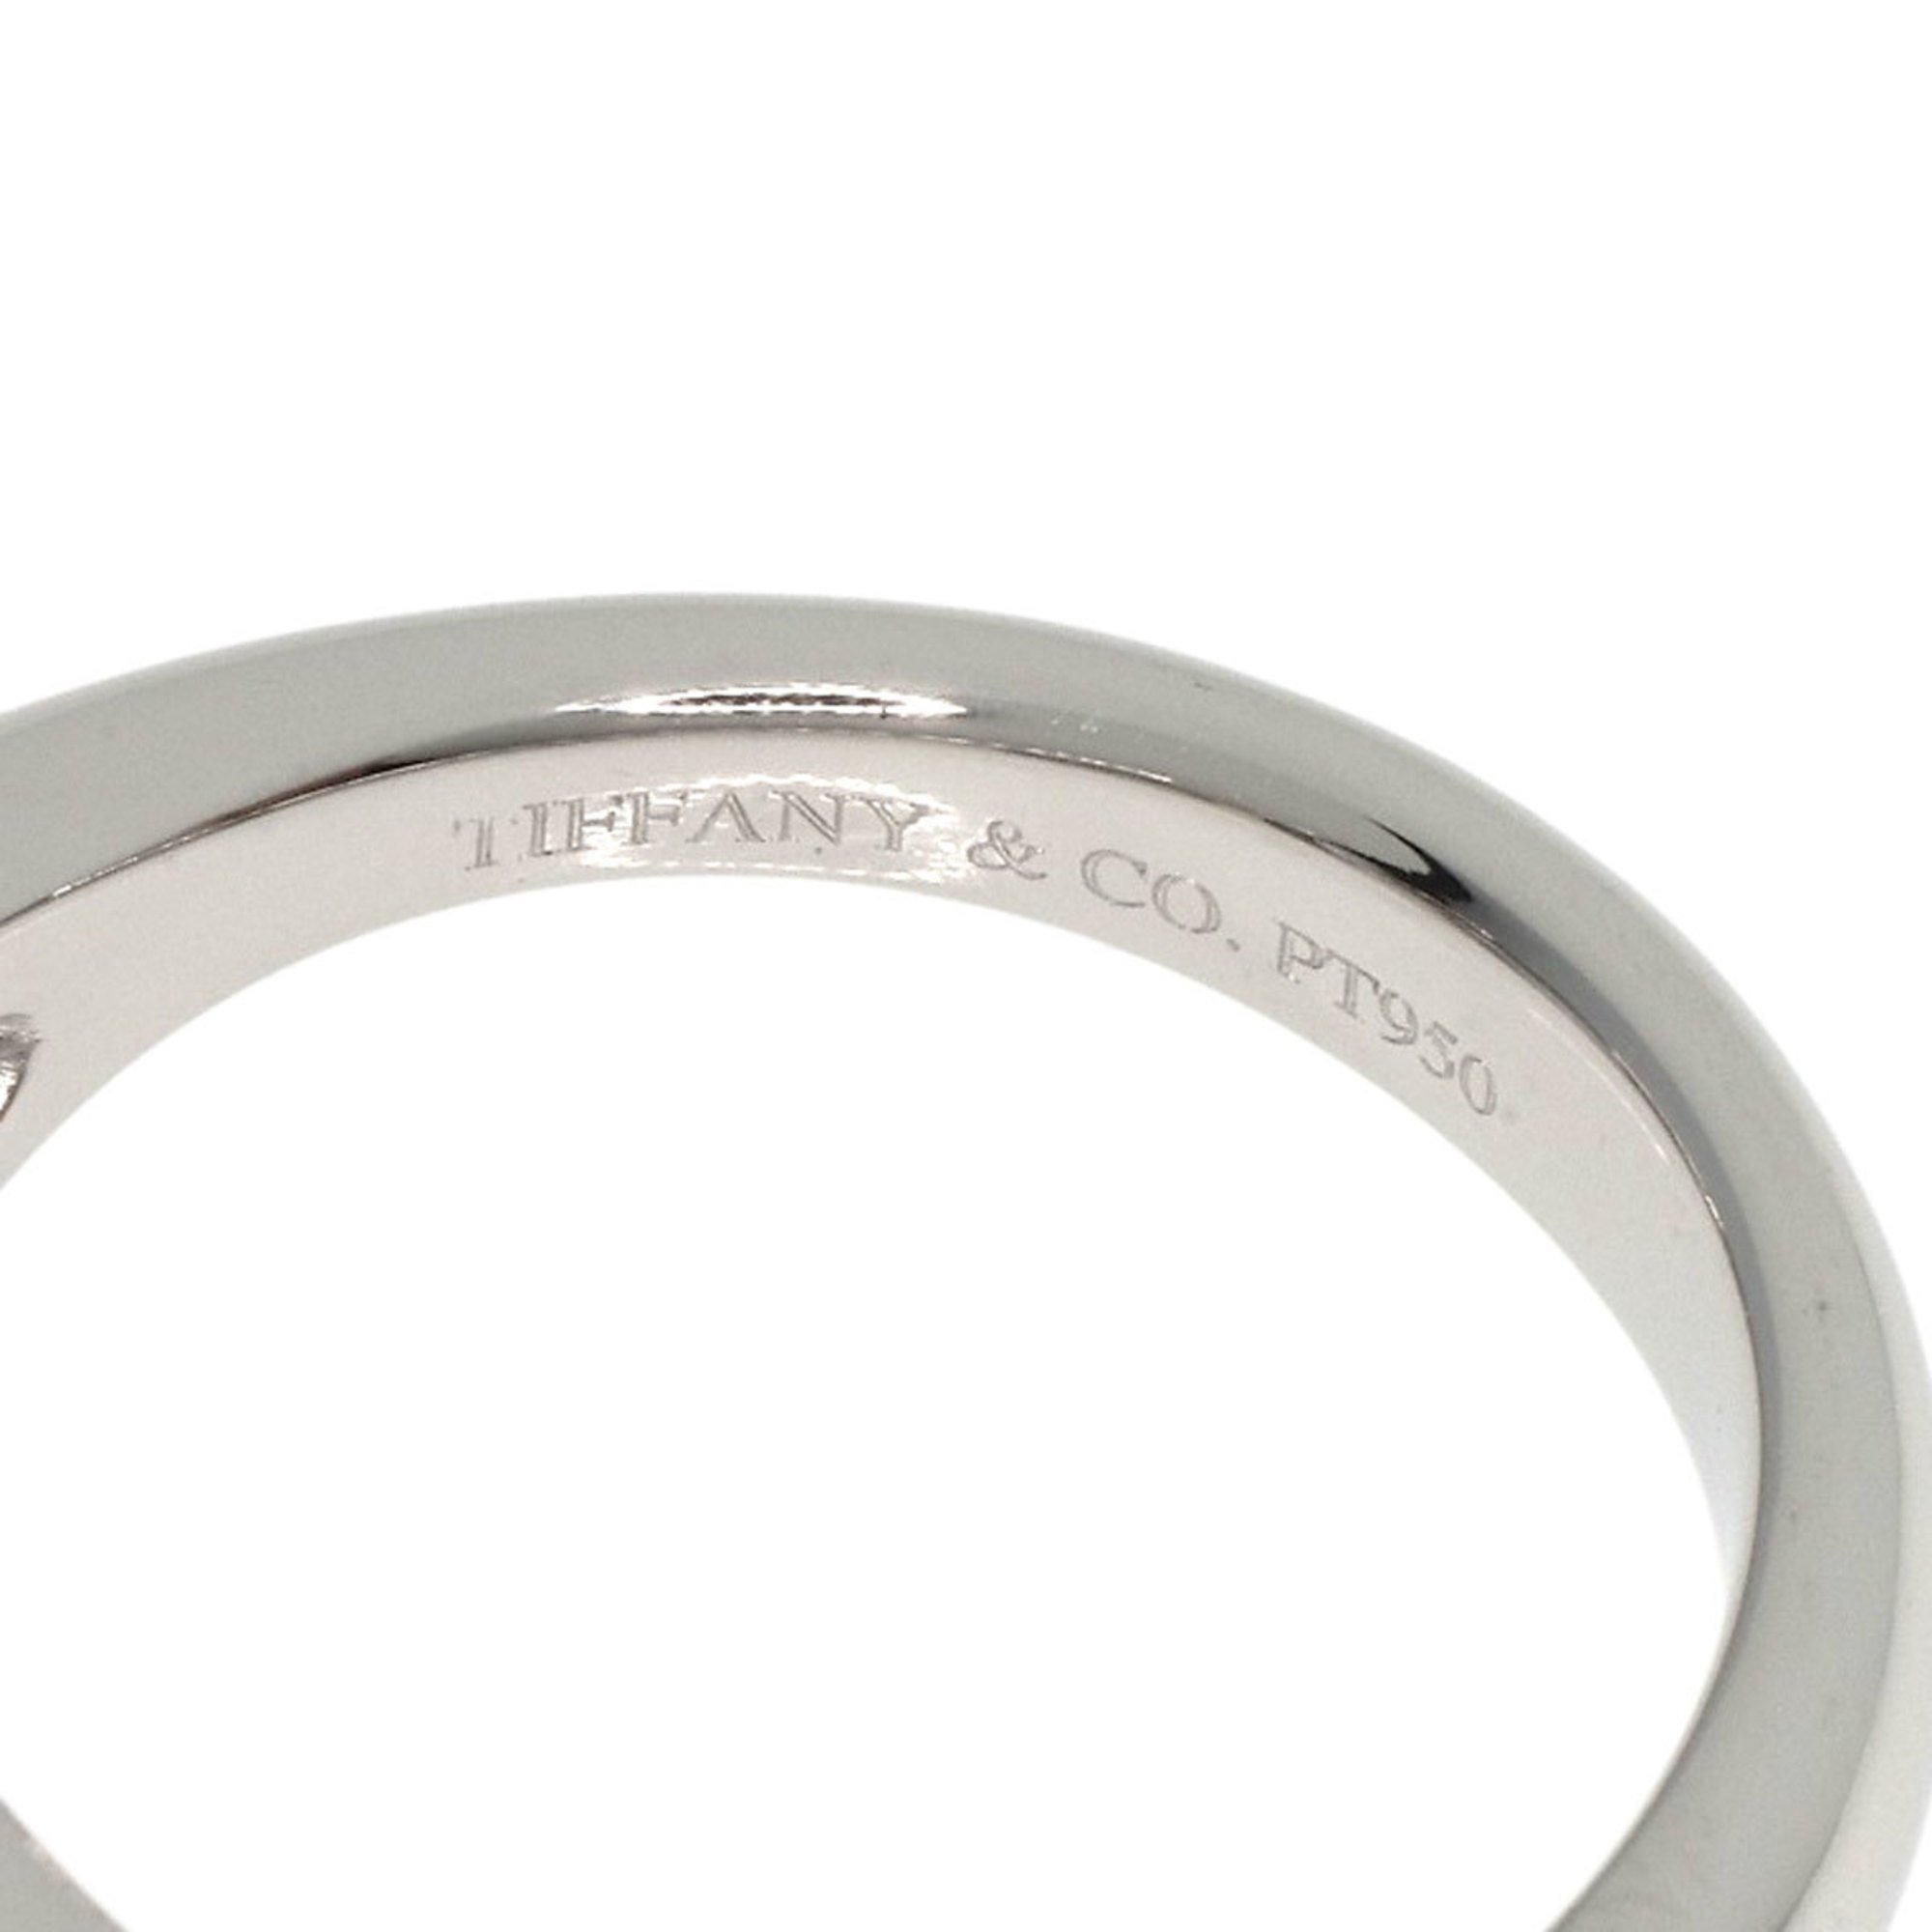 Tiffany & Co. Double Teardrop Diamond Ring, Platinum PT950, Women's, TIFFANY